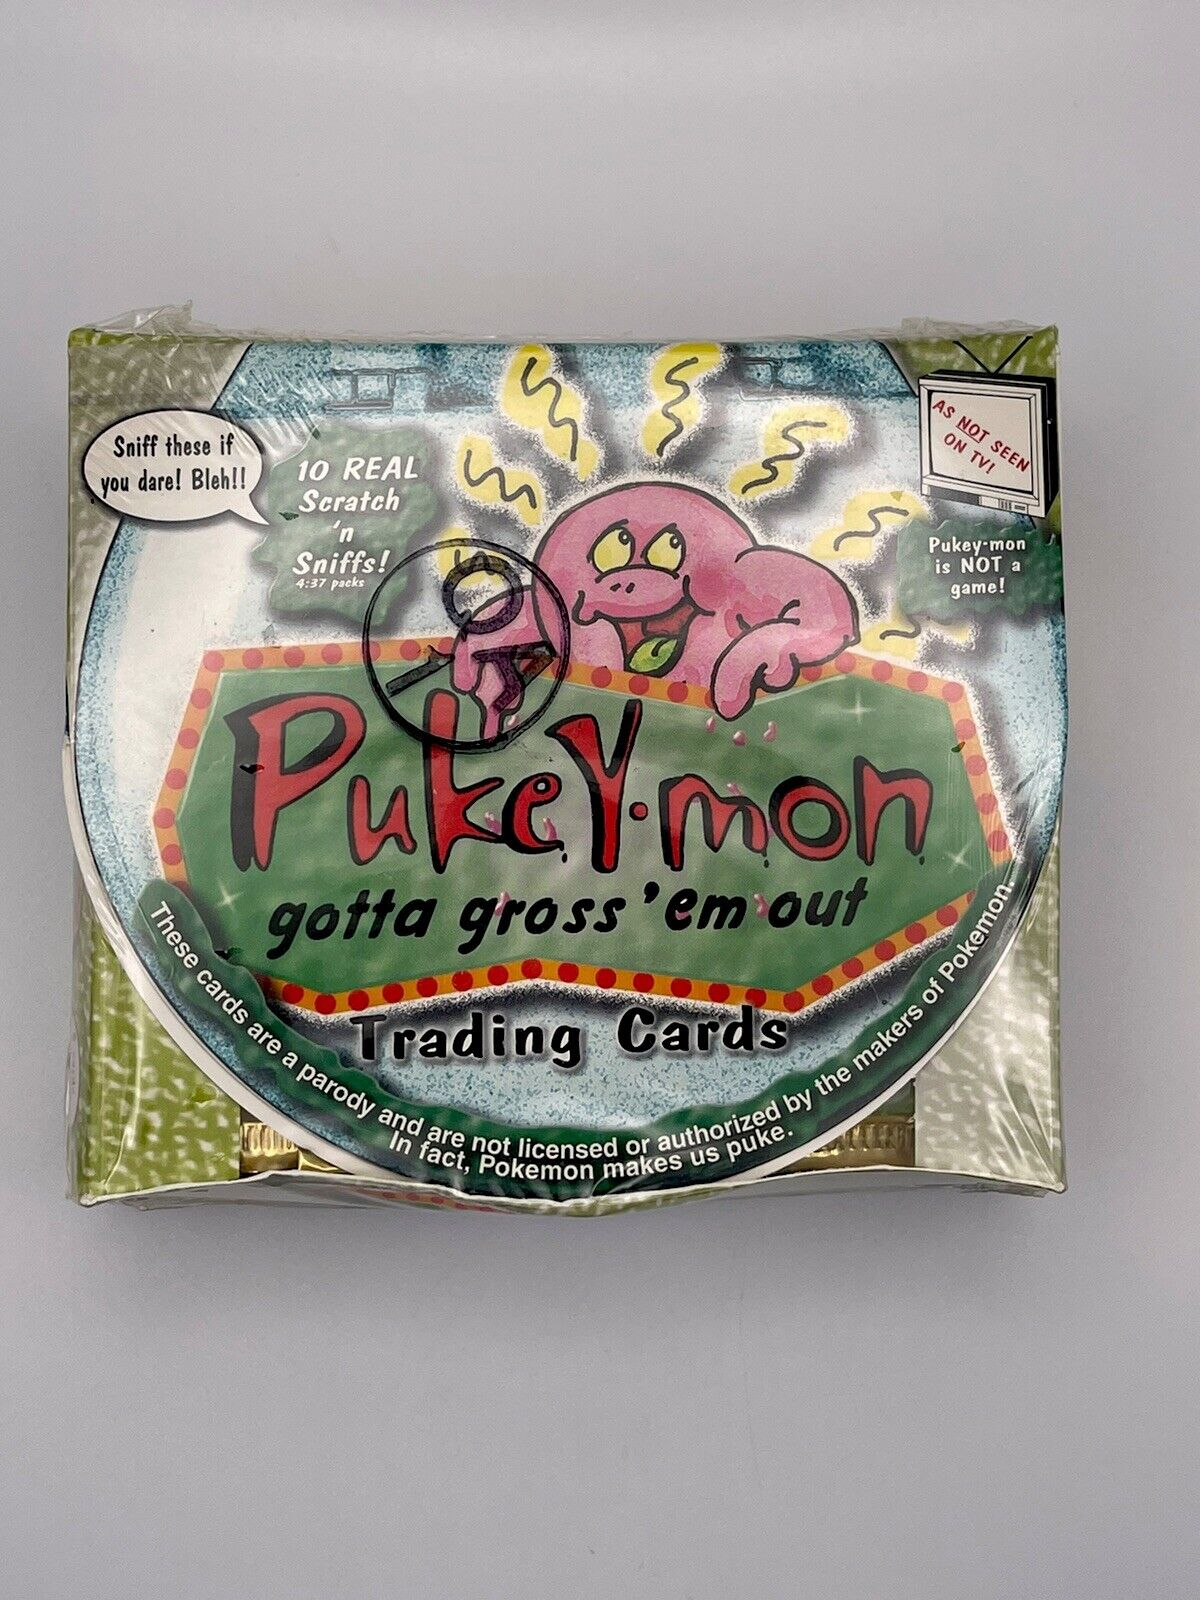 PUKEY-MON NEW/SEALED BOX 36-PACKS PUKEYMON POKEMON PARODY like garbage pail kids